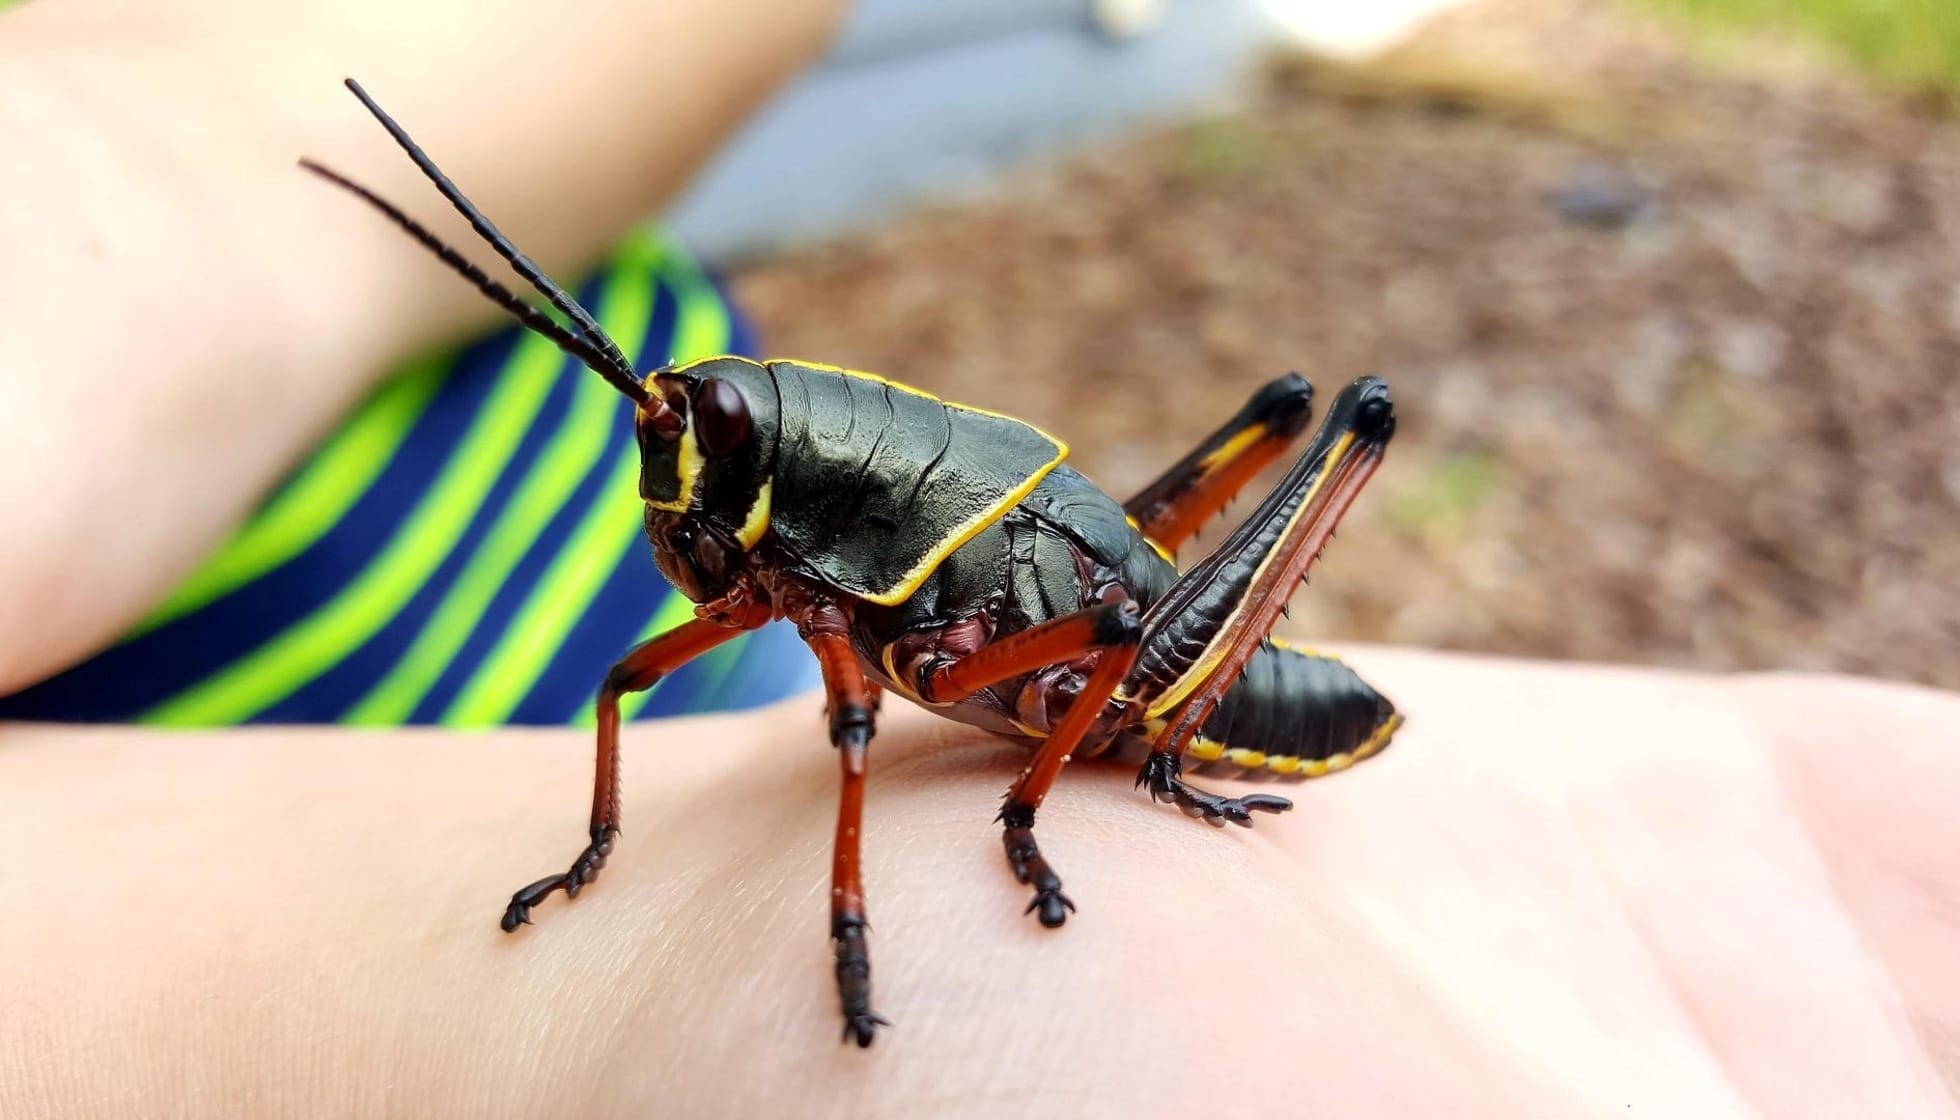 giant black grasshopper